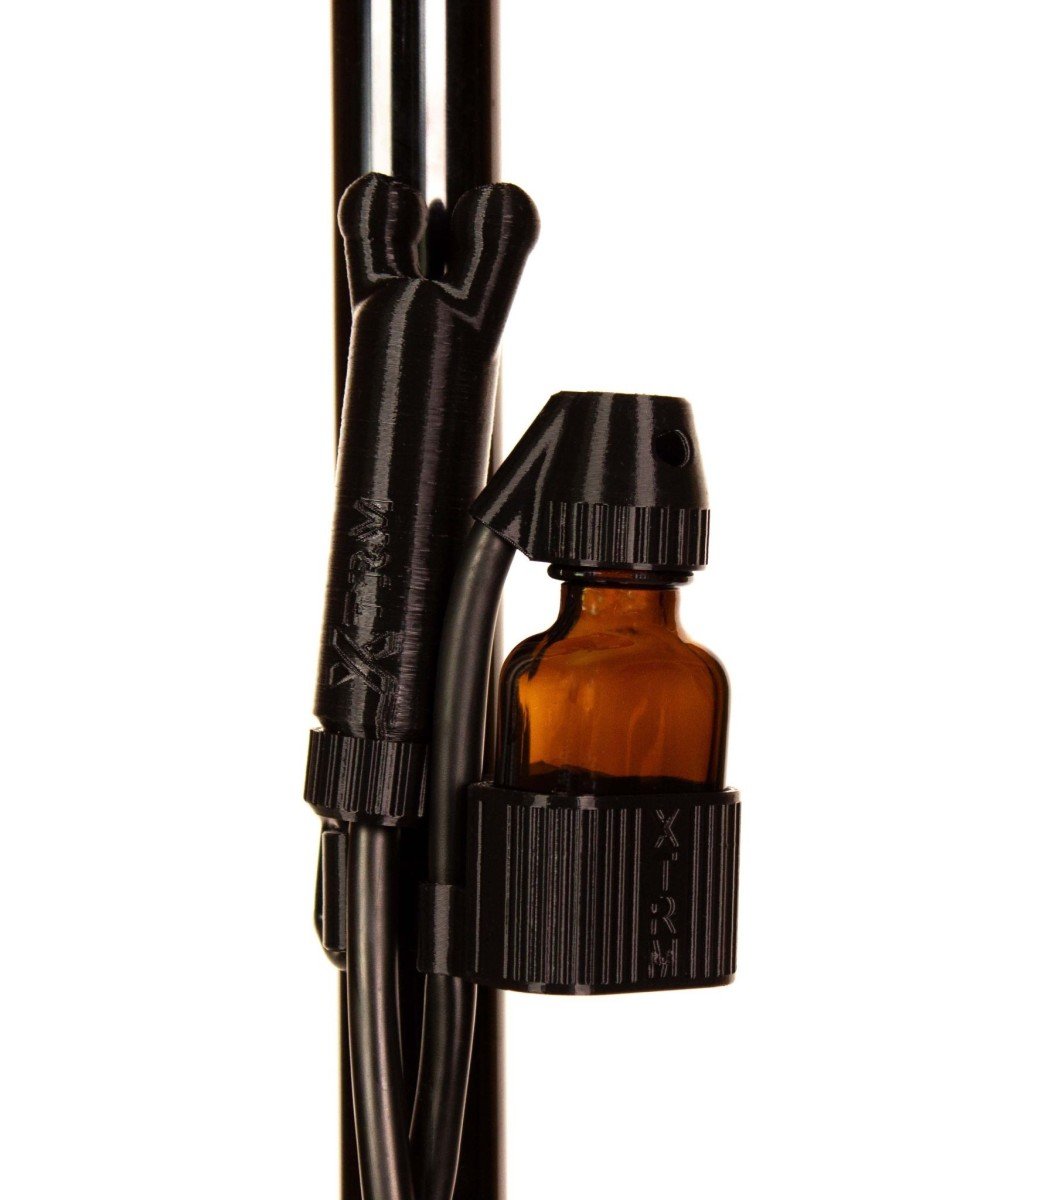 XTRM Slinger Black Oval #4, inhalátor aróm s držiakom na sling